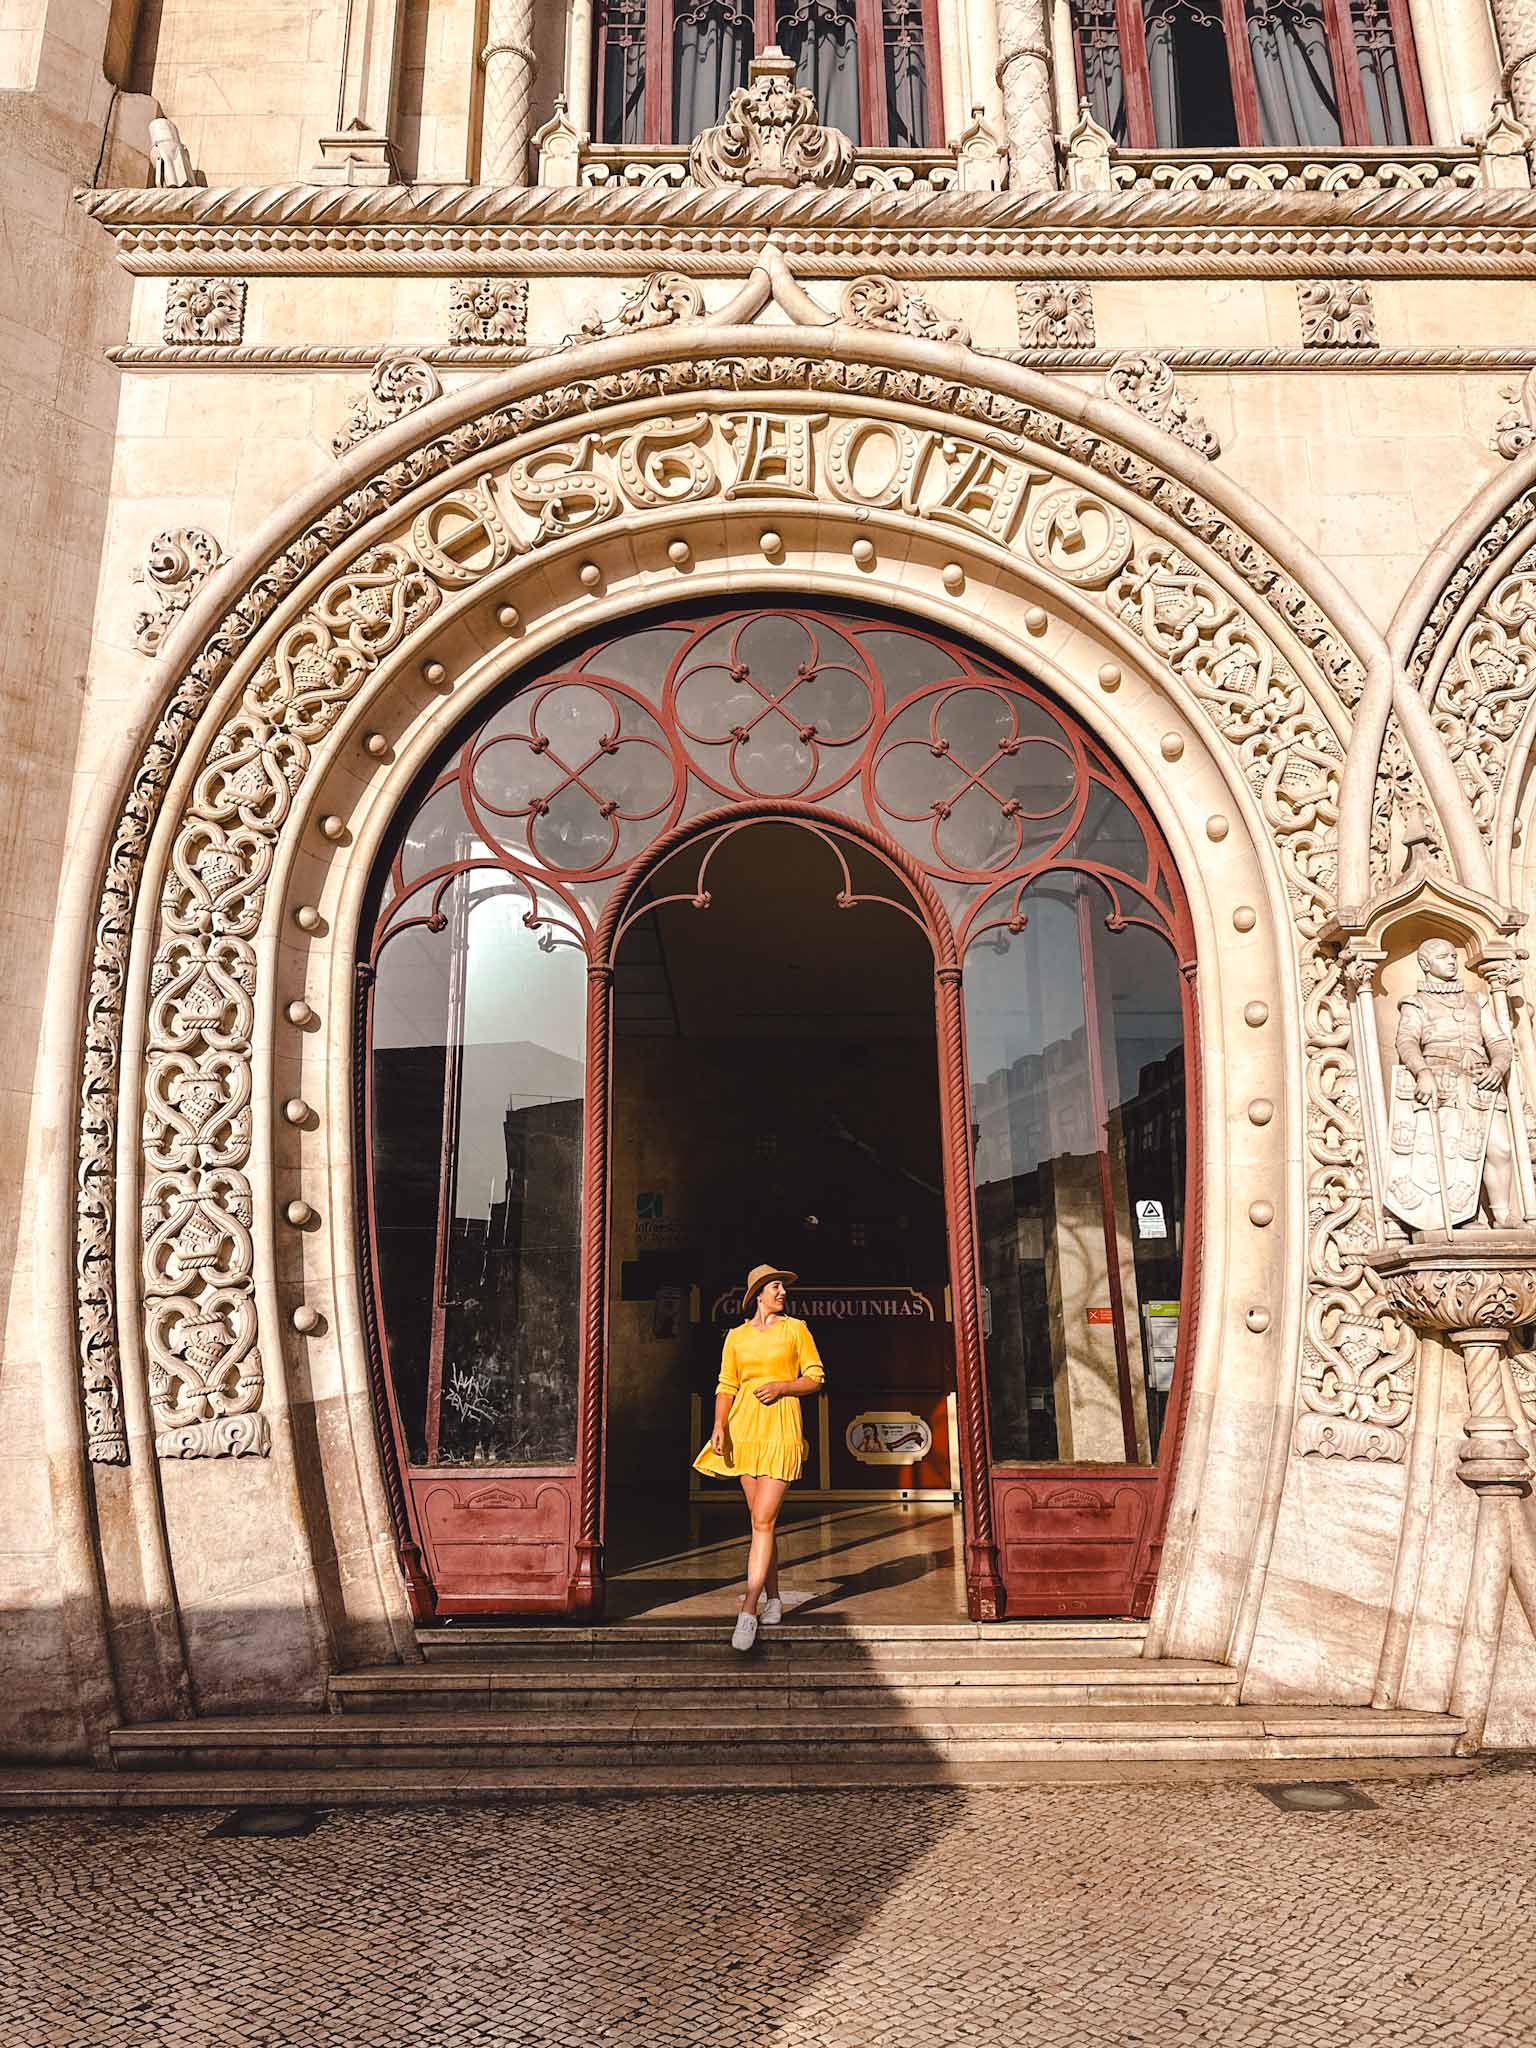 Best Instagram photo spots in Lisbon, Portugal - Rossio railway station